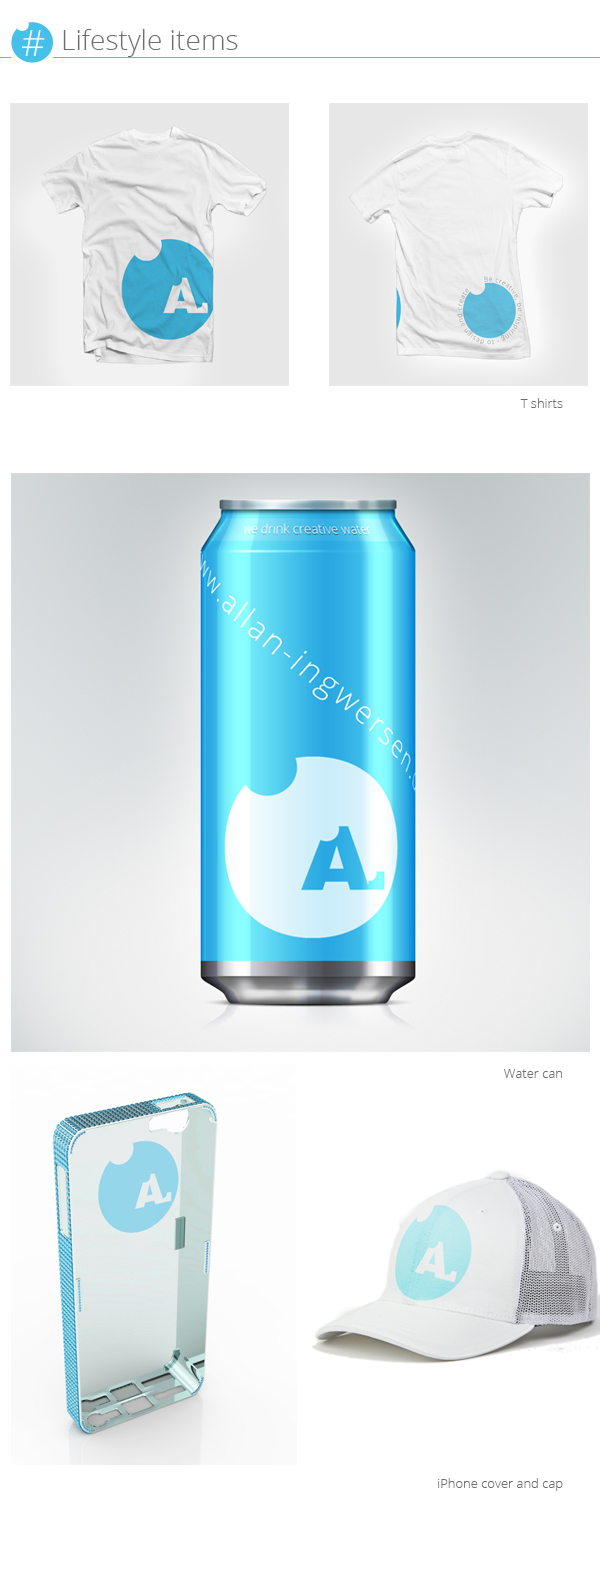 simple  Allan Ingwersen print business card  cap  can  water slogan logo  Icons Personal Brand CV Print on paper a4